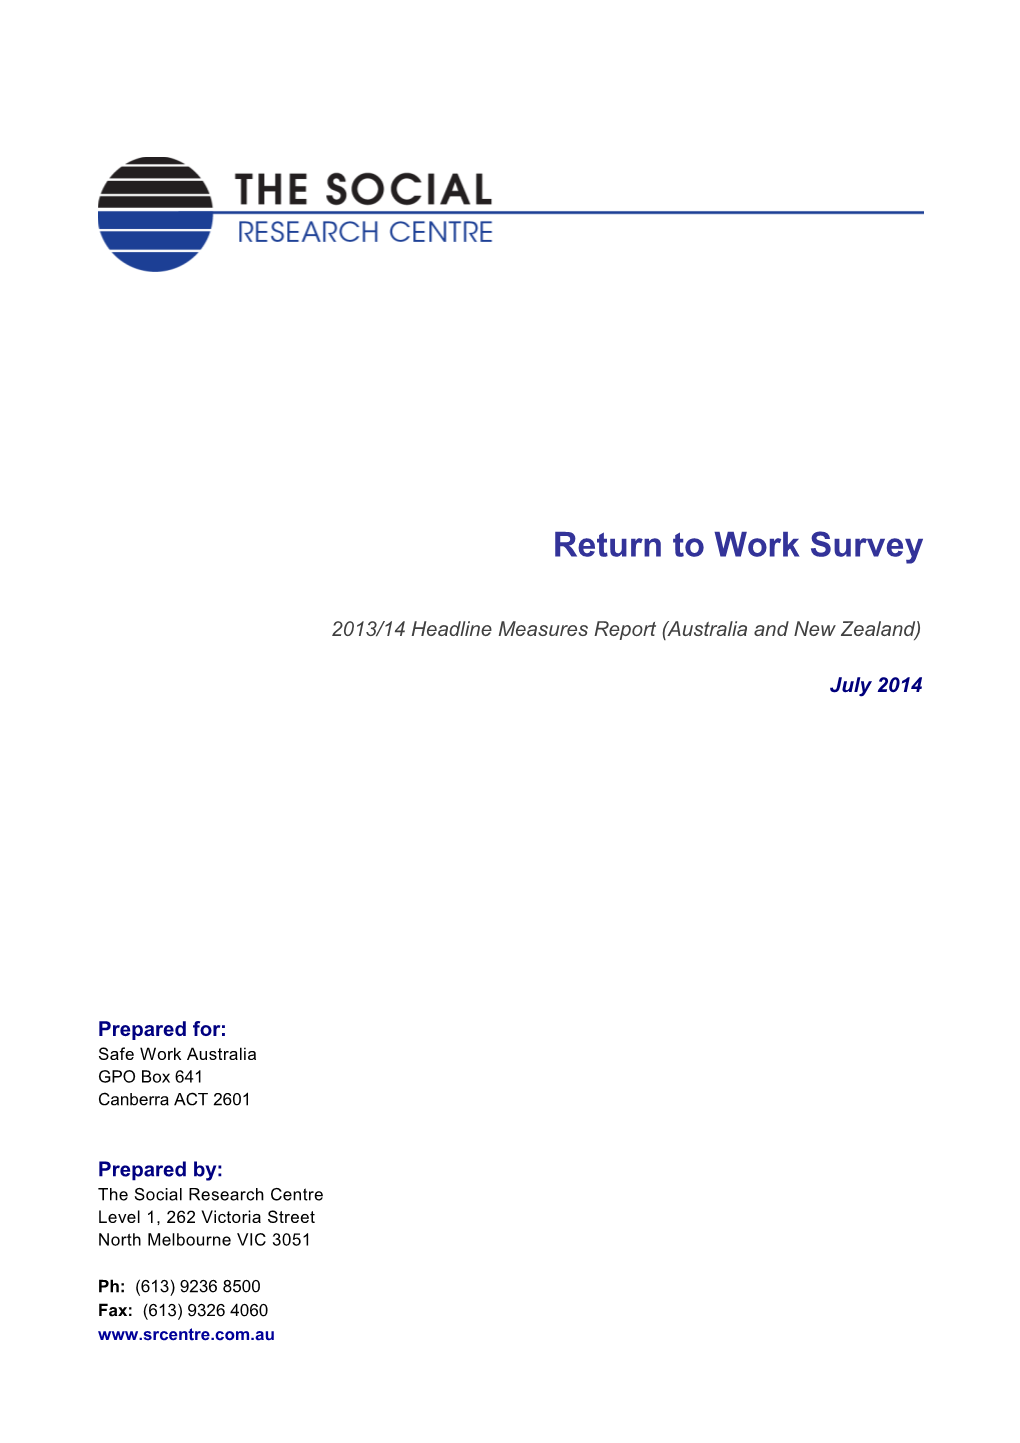 National Return to Work Survey 2014 - Headline Measures Report